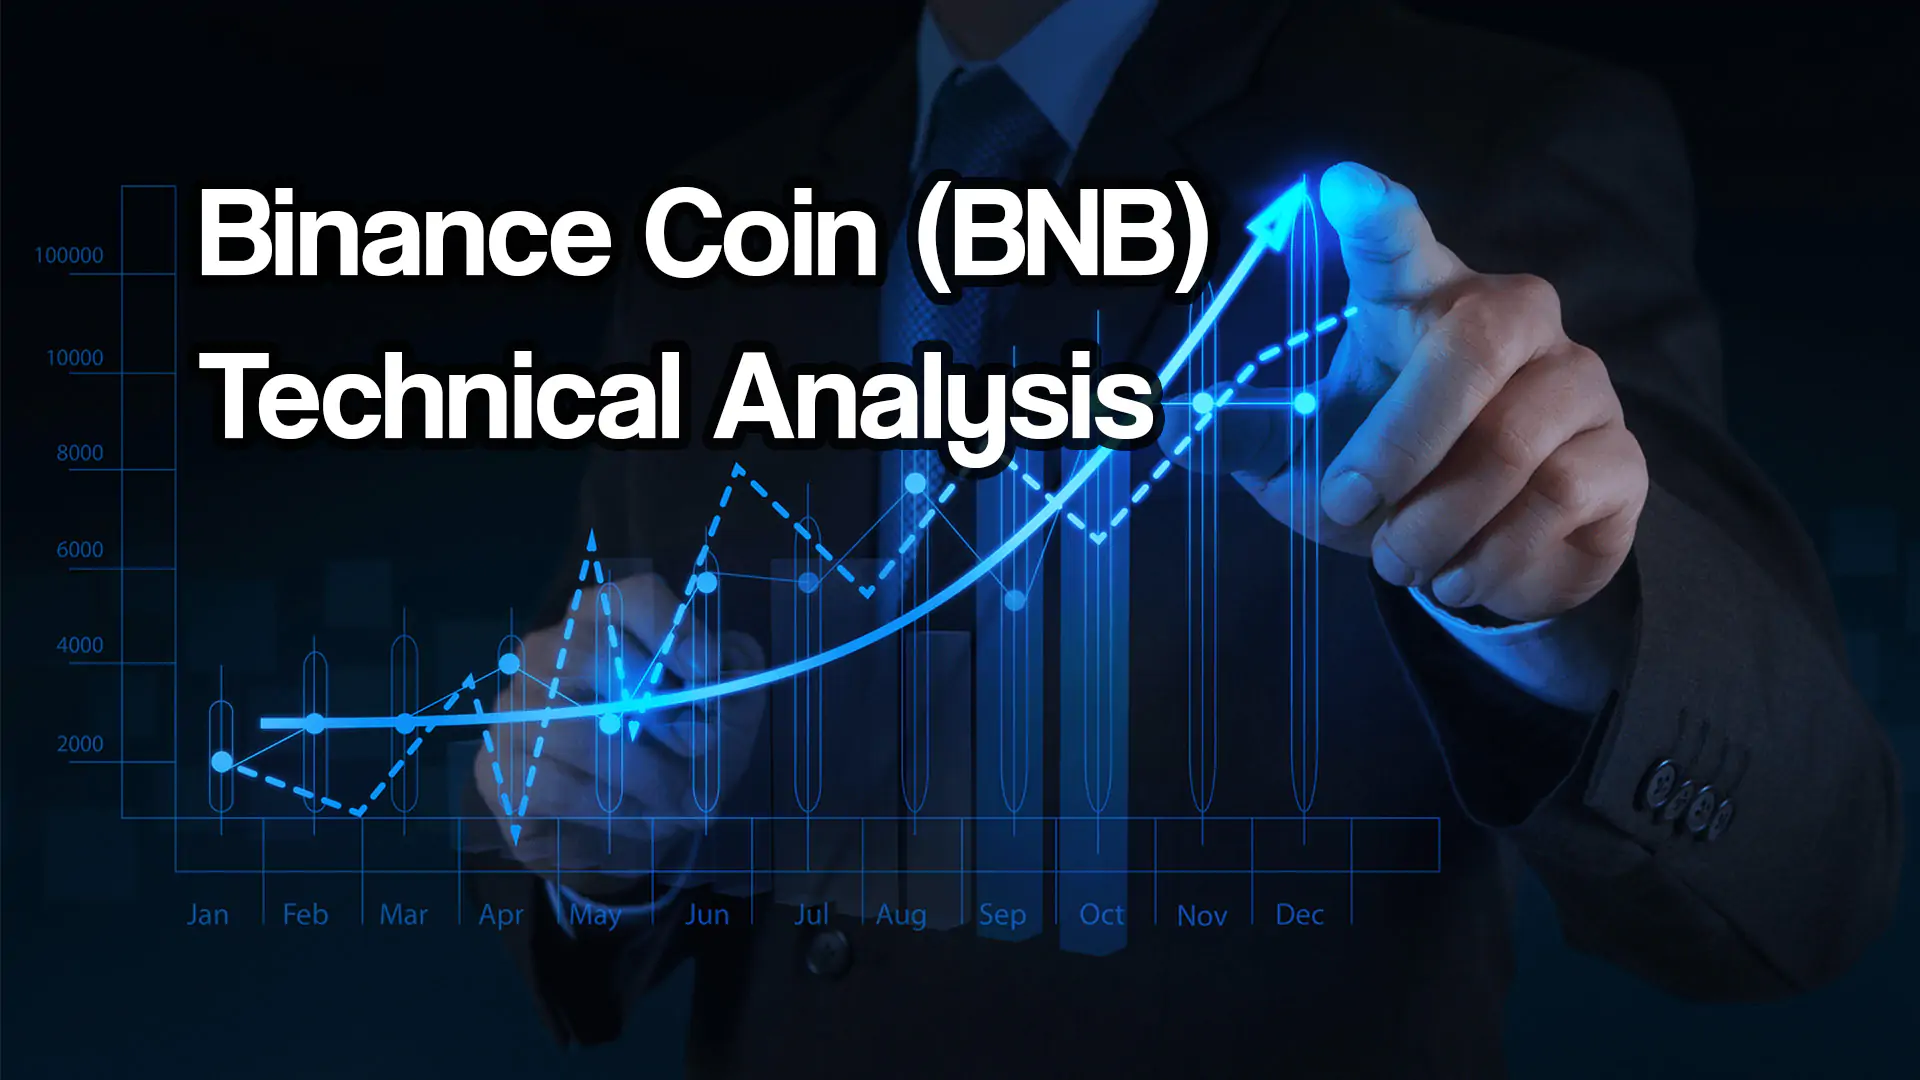 Binance Coin (BNB) Technical Analysis